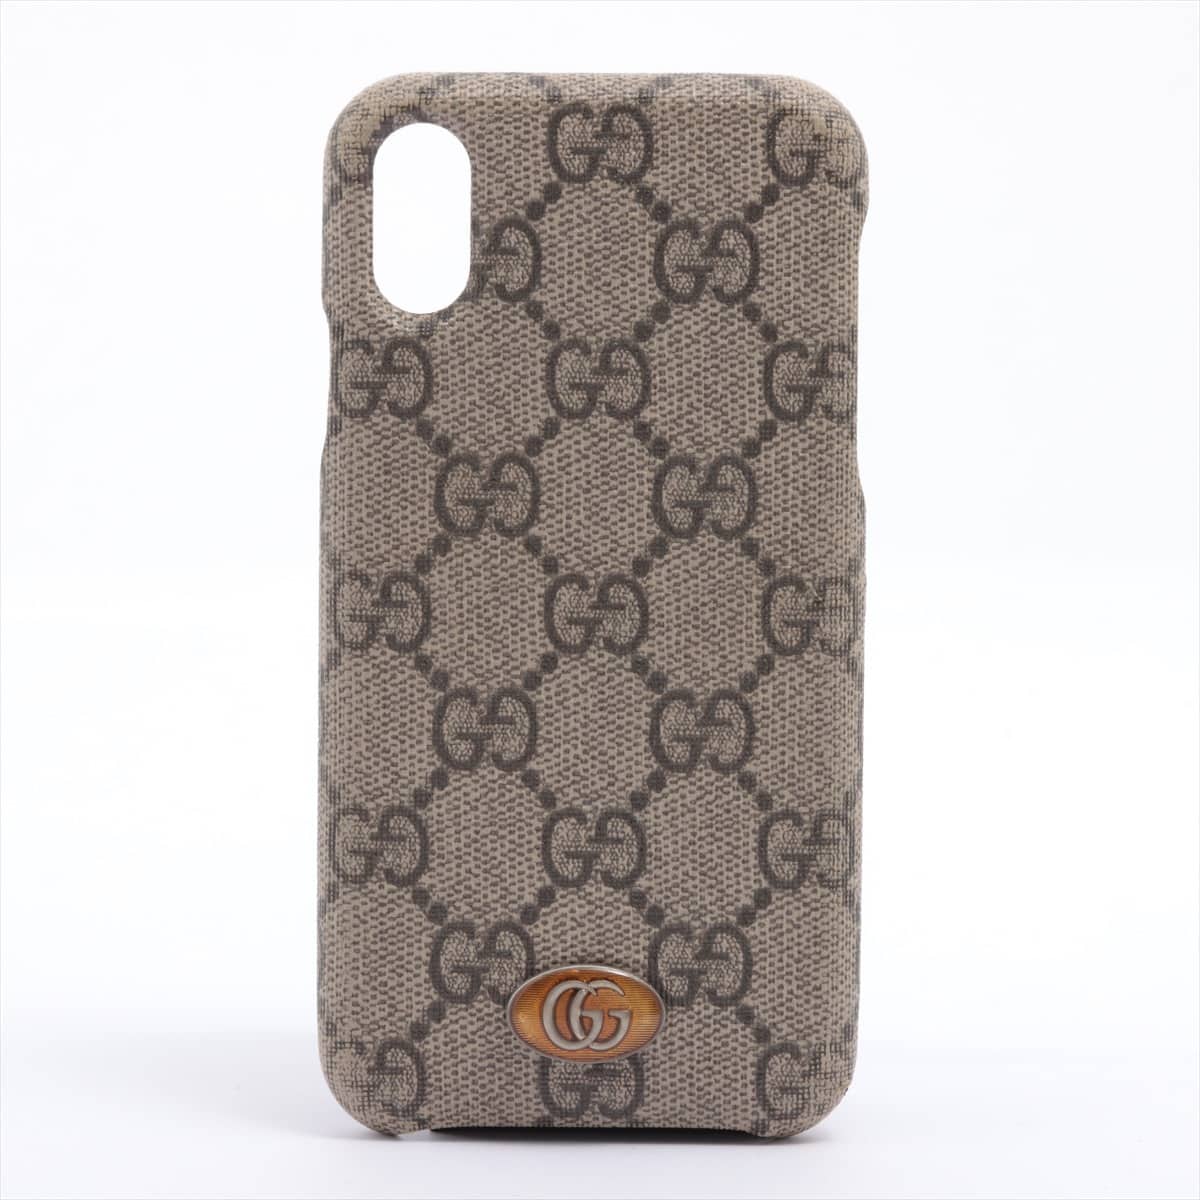 Gucci GG Supreme 587672 PVC & leather Mobile phone case Beige iPhoneX/Xs